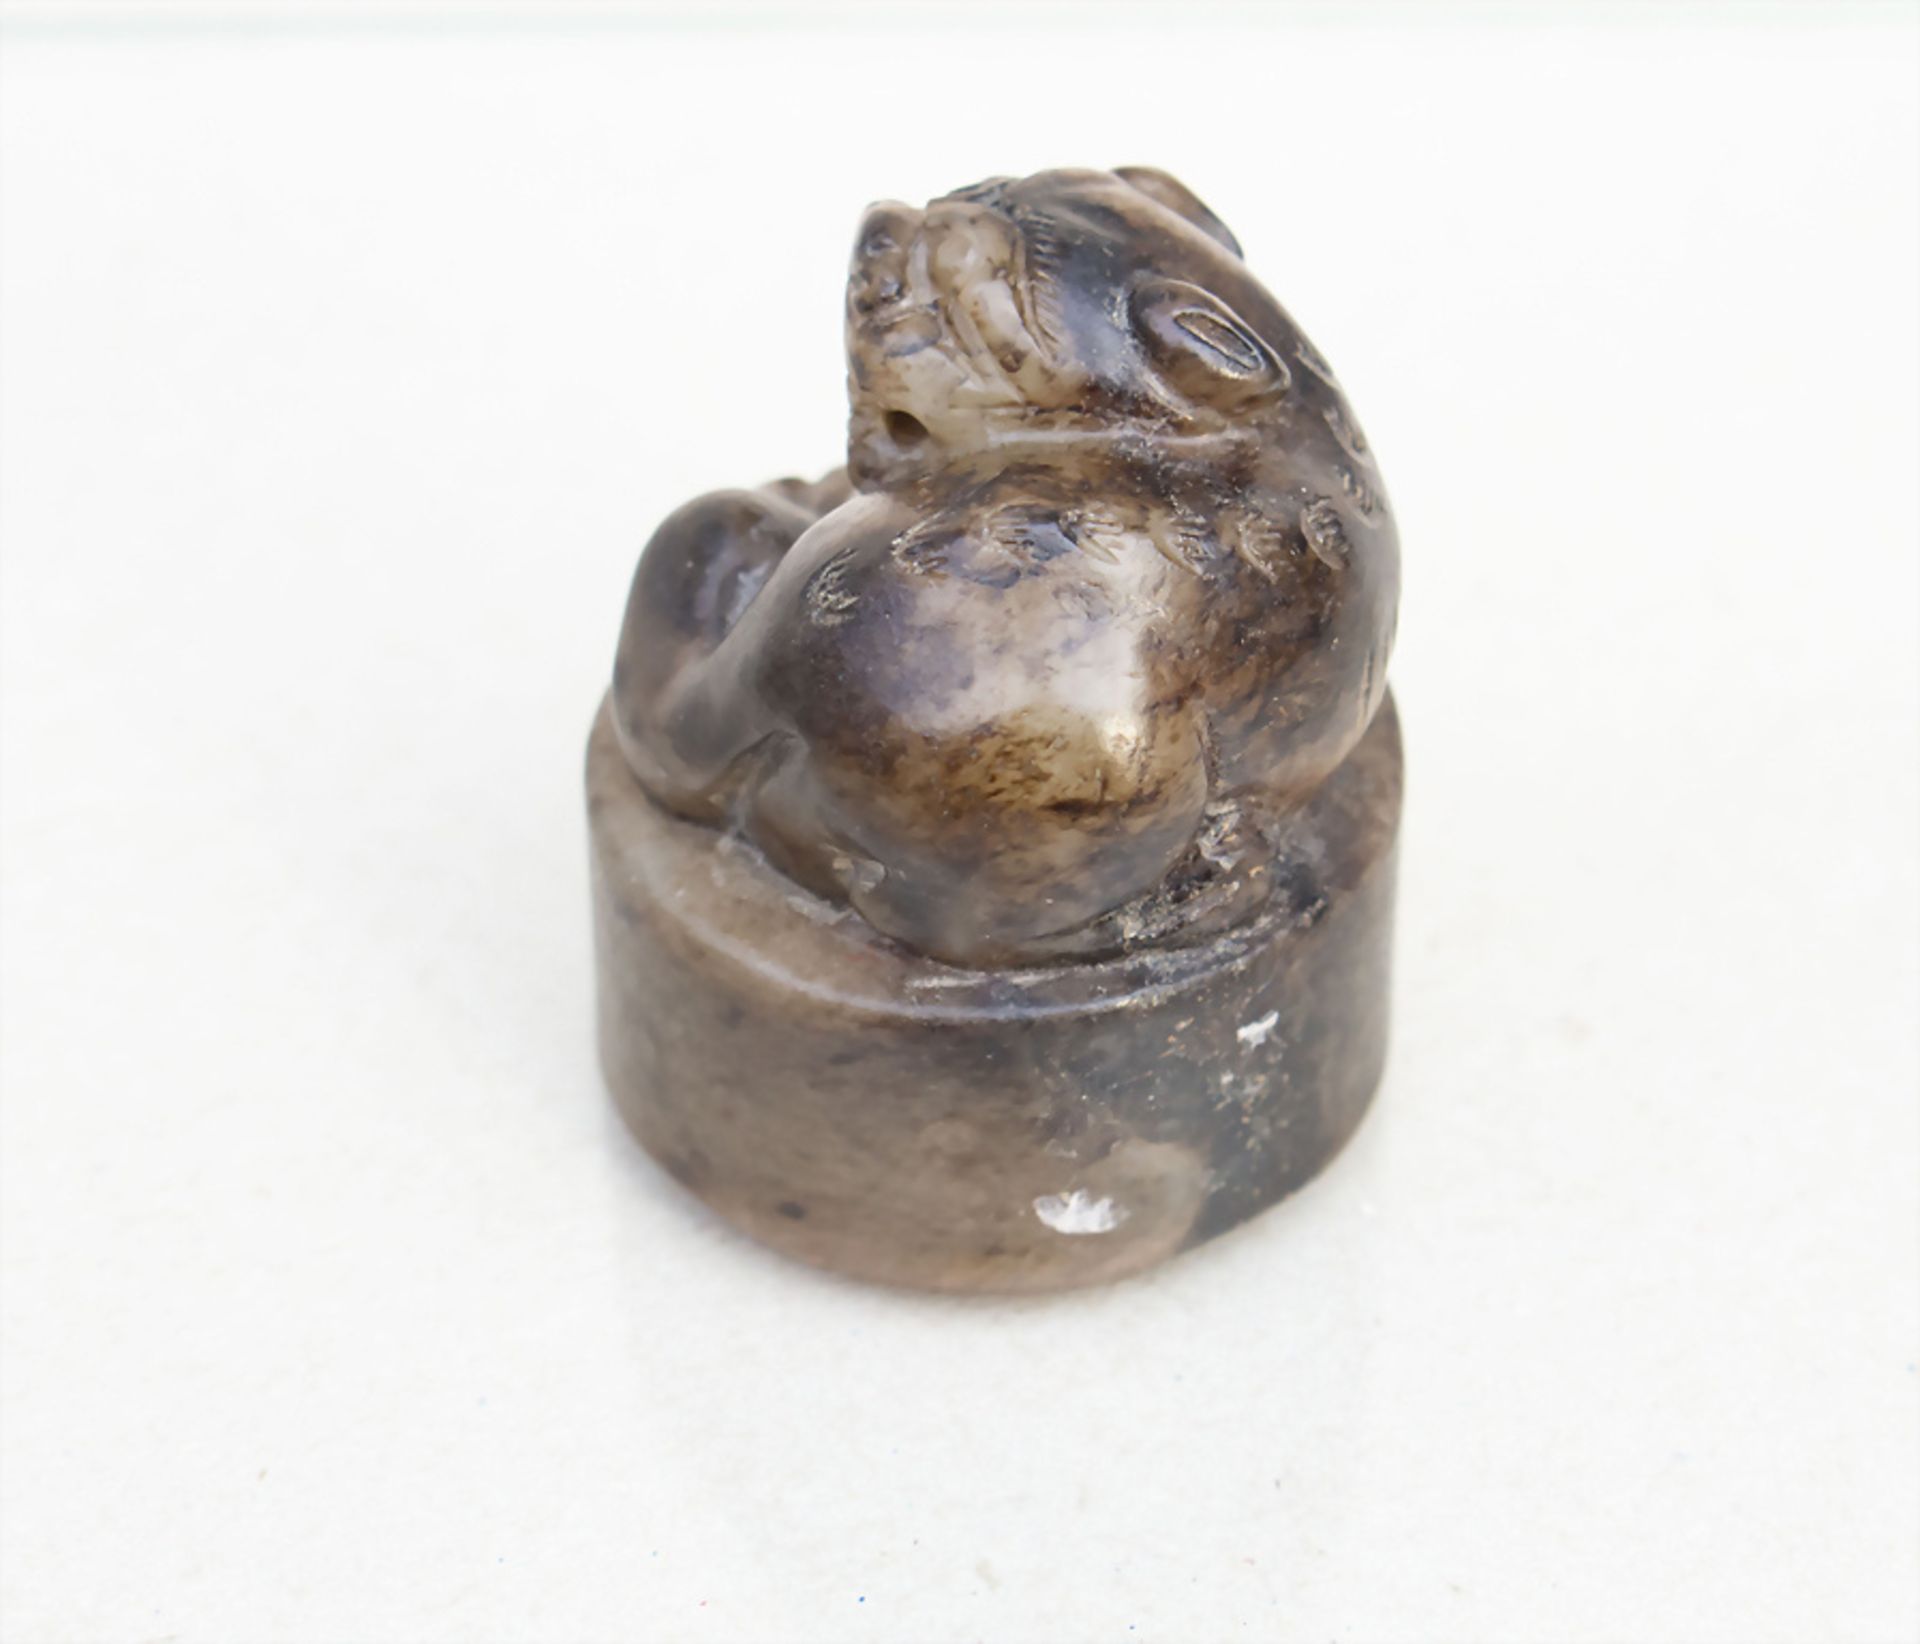 Jadesiegel 'Löwe' / A jade seal 'Lion', China, Qing-Zeit, 19.-20. Jh. - Image 2 of 6